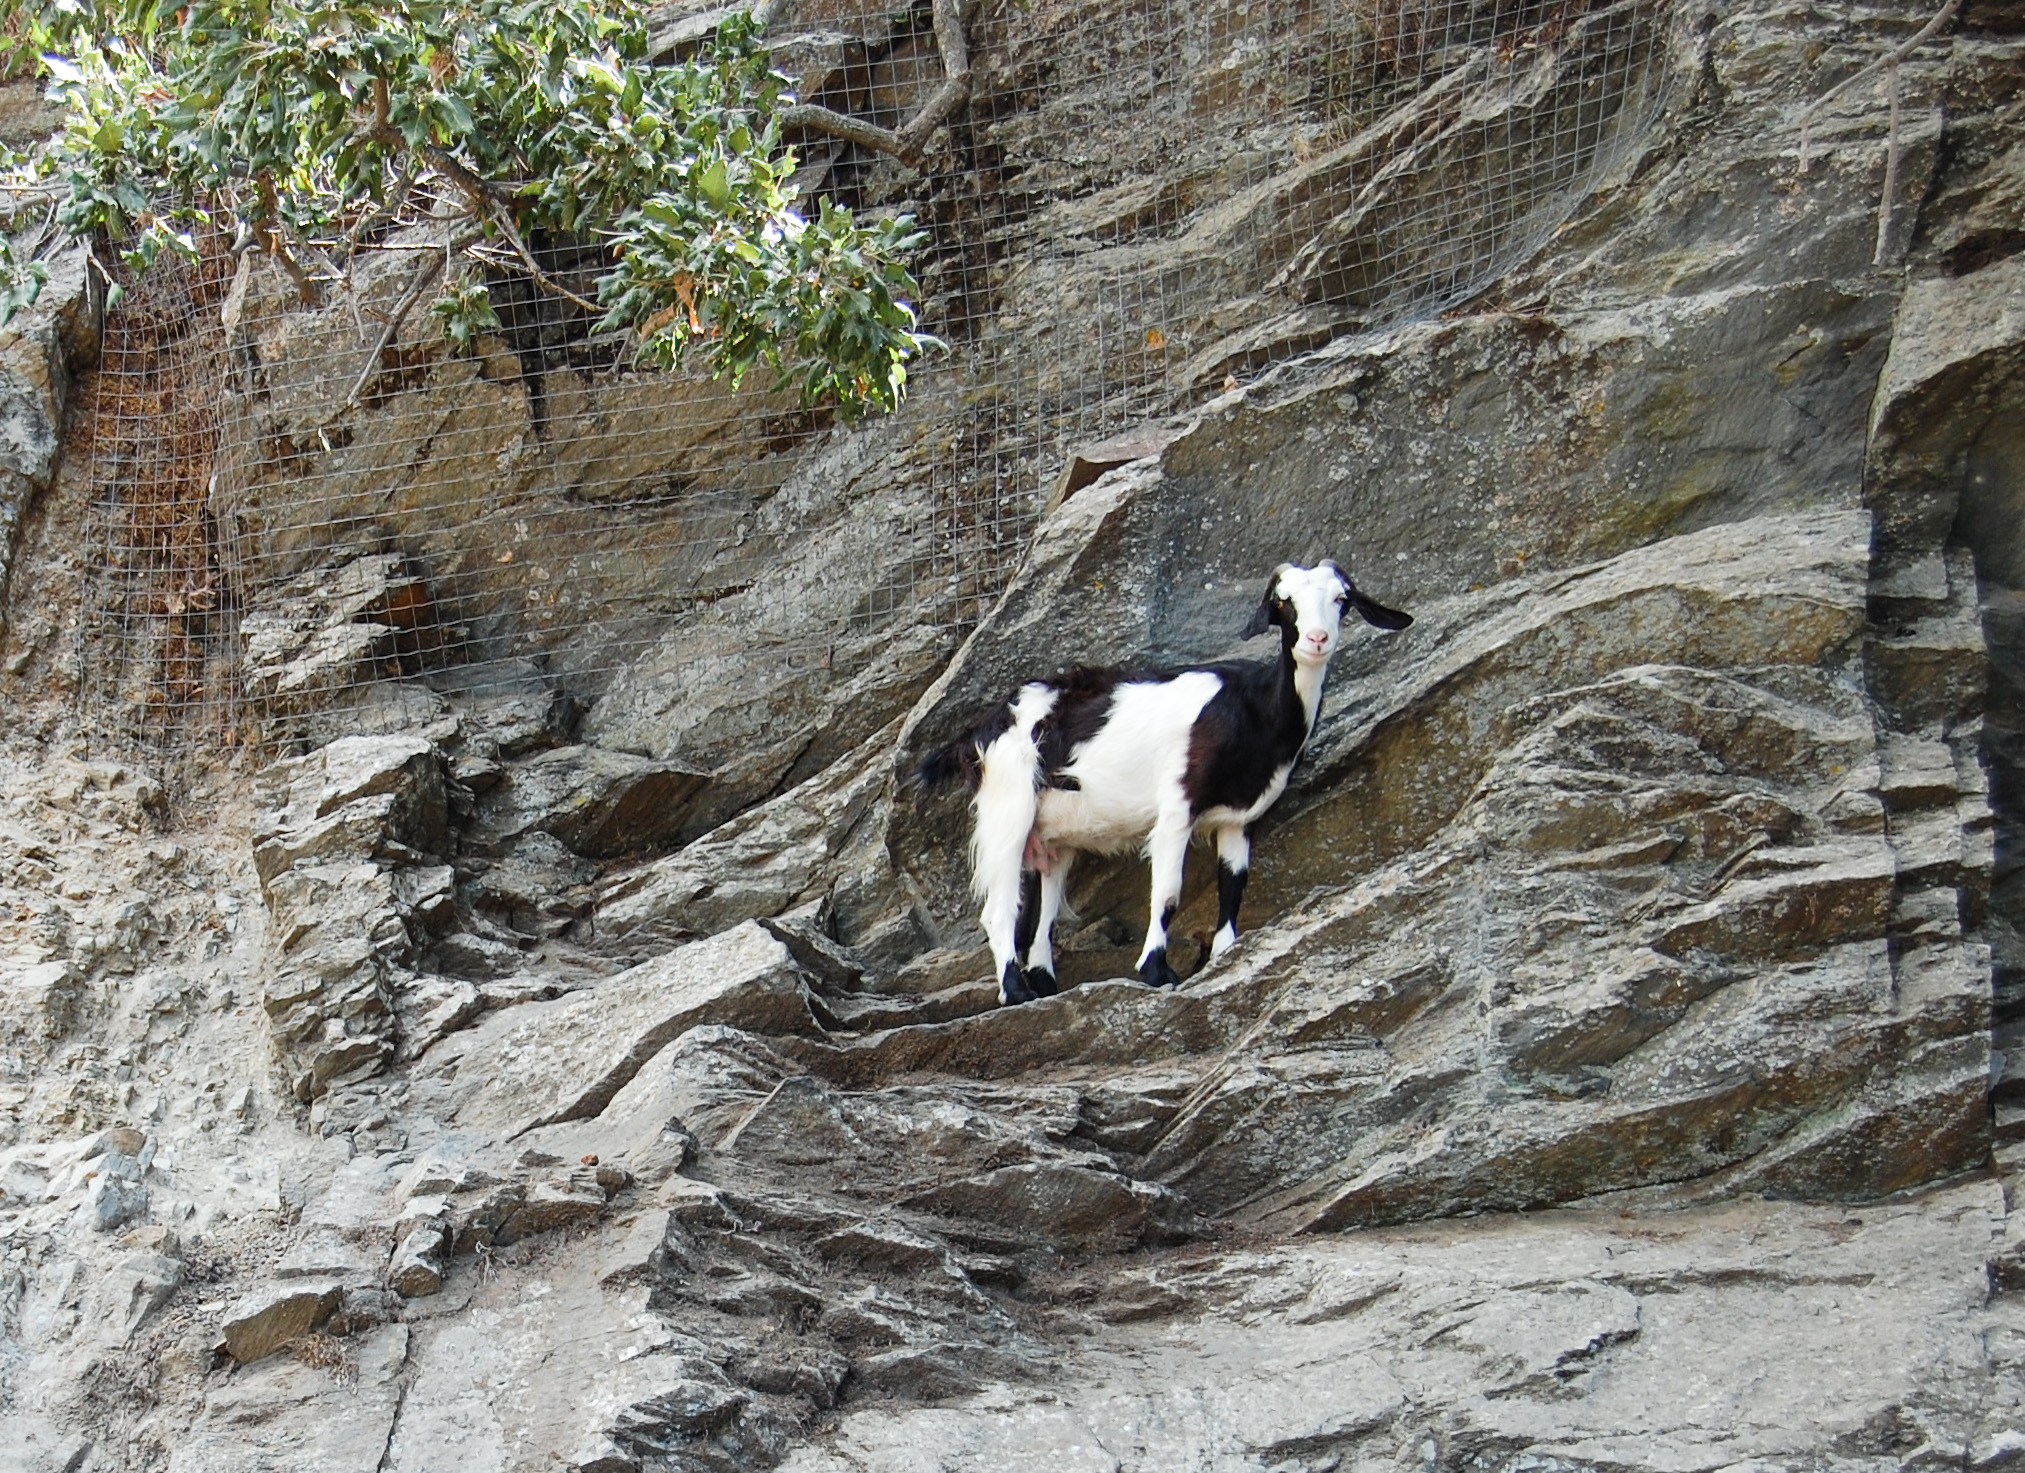 Goat on the edge